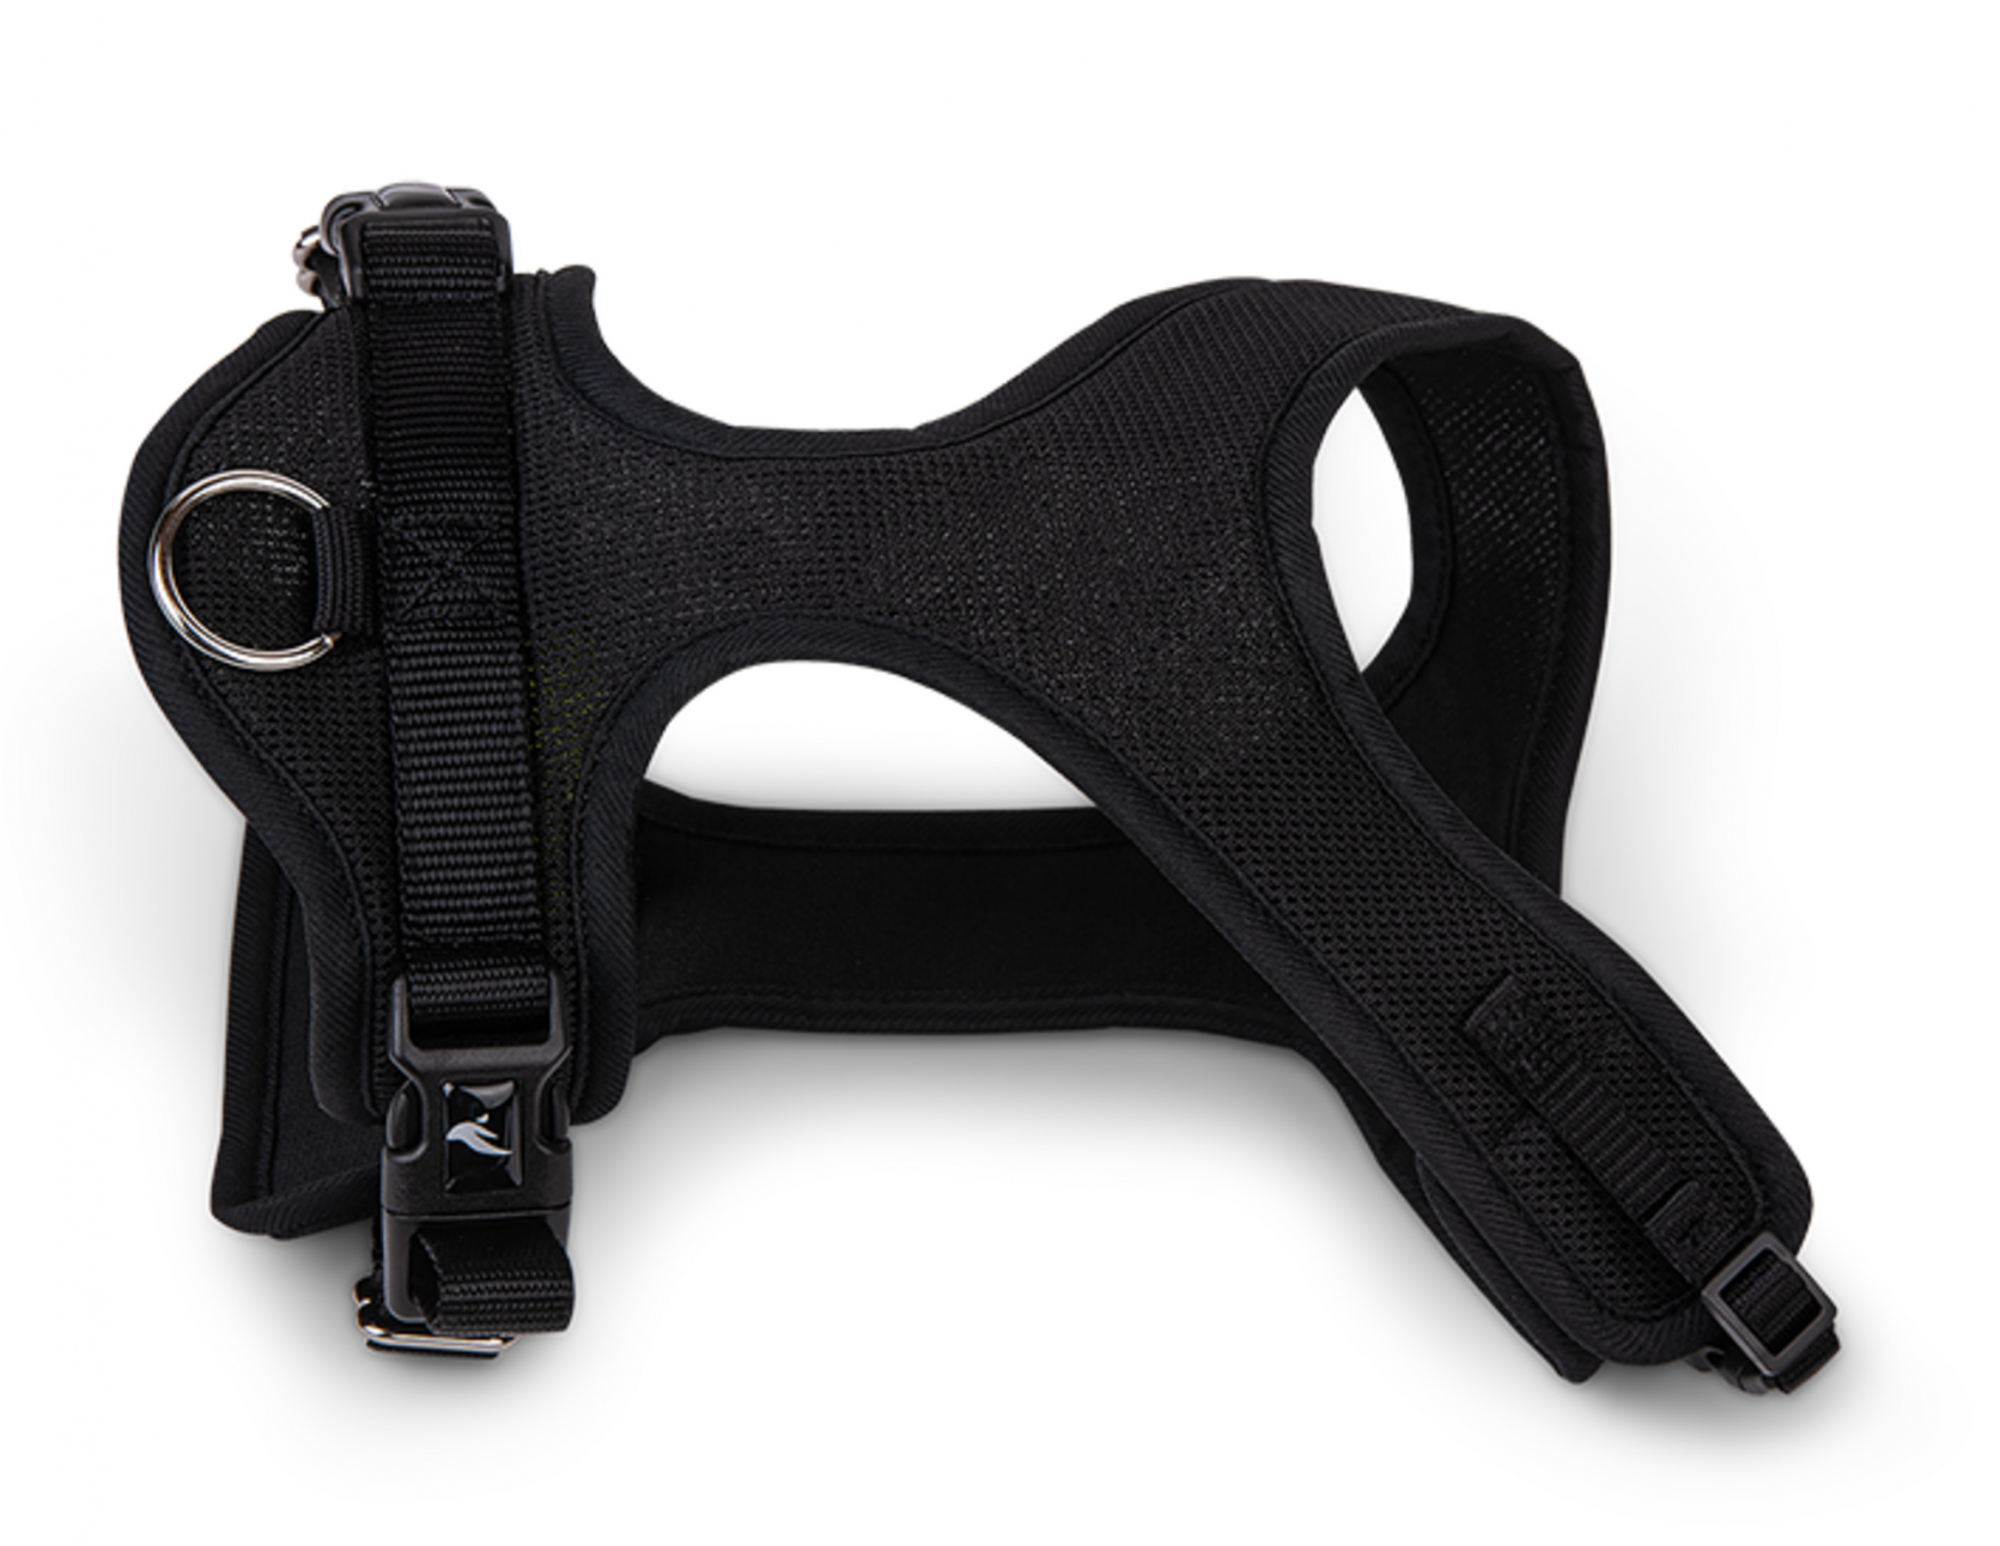 Imbracatura Comfort Mesh nera per cani - varie misure disponibili